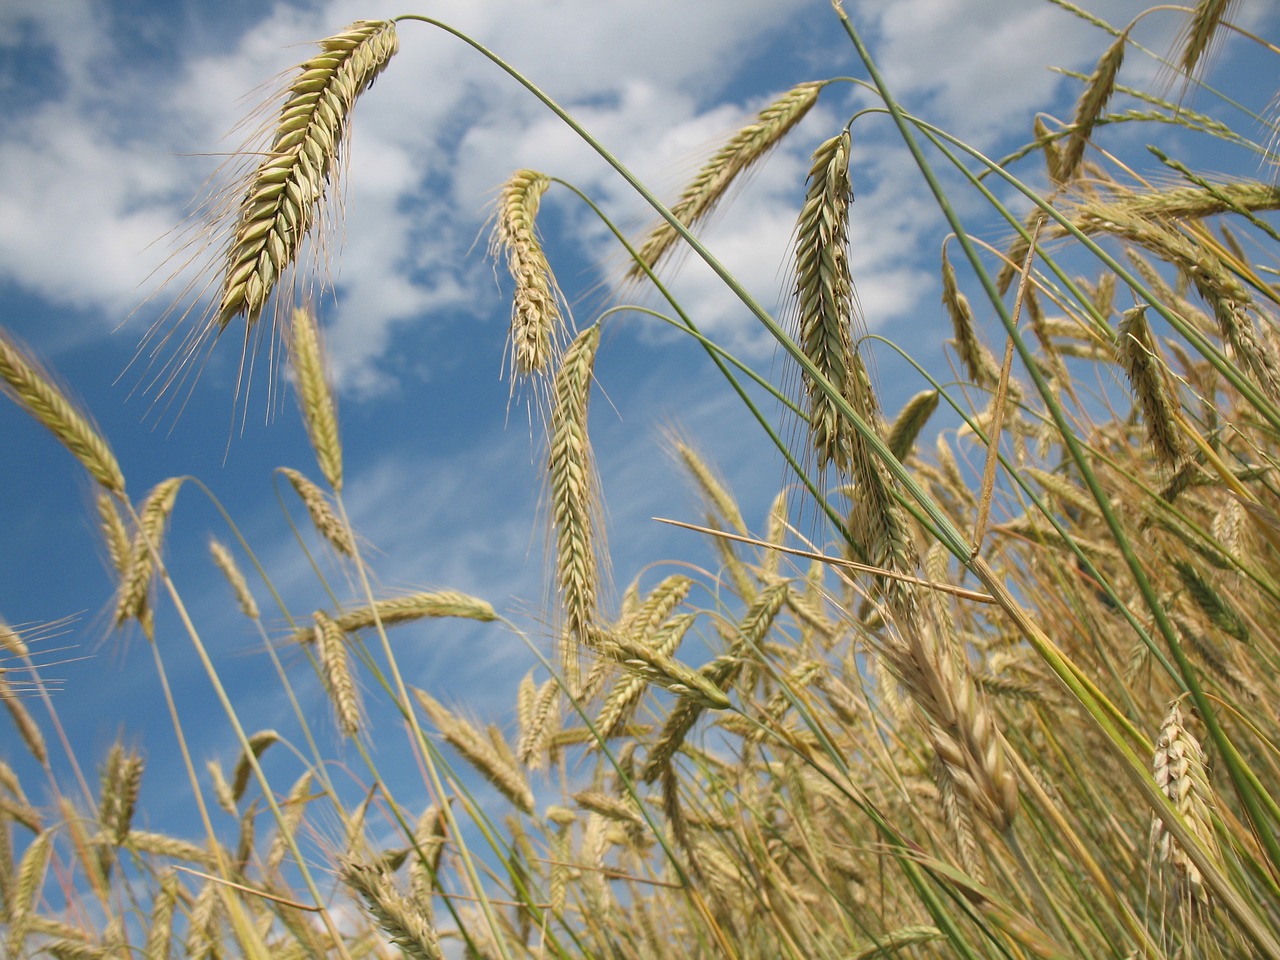 Field of wheat under a blue cloudy sky by Robin Via Pixabay